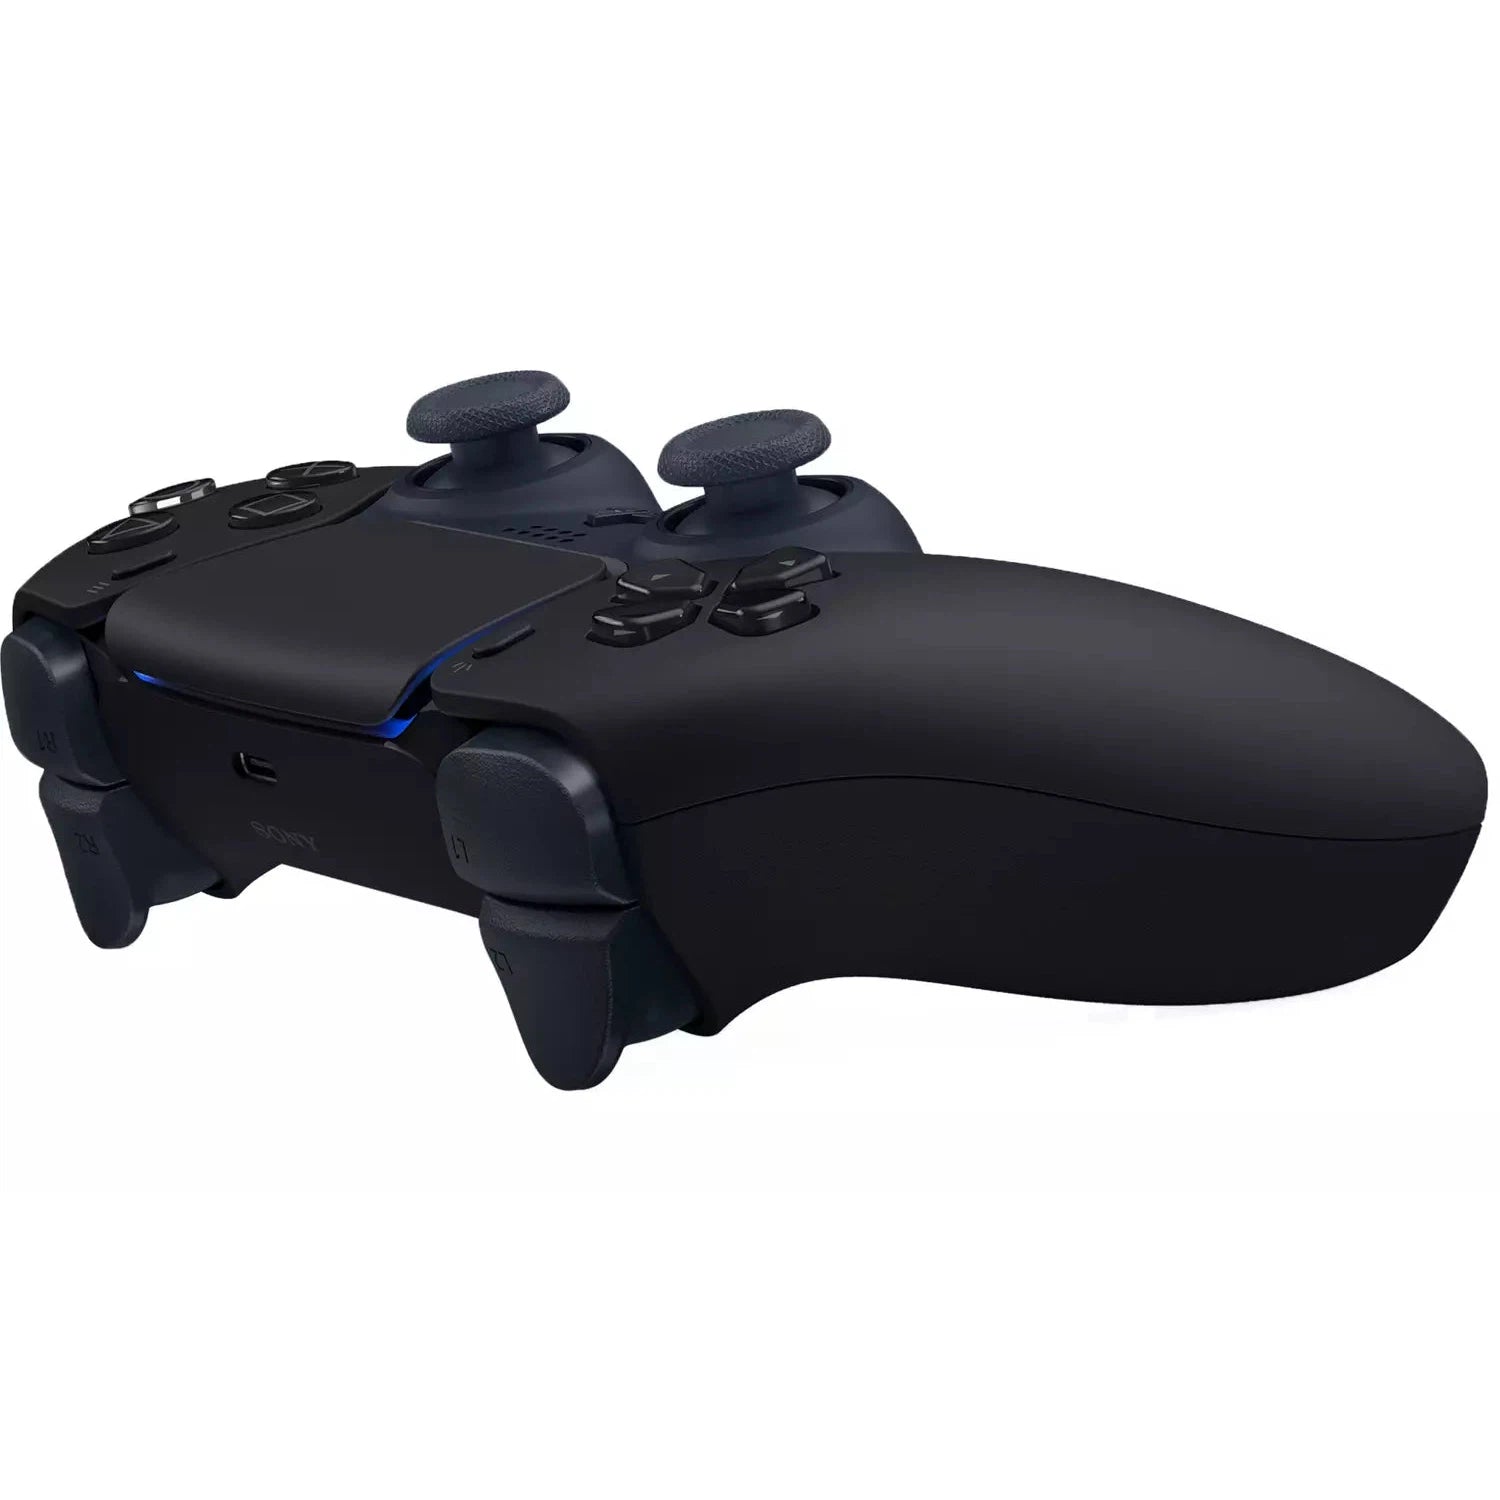 Sony PS5 DualSense Wireless Controller - Black - Refurbished Good